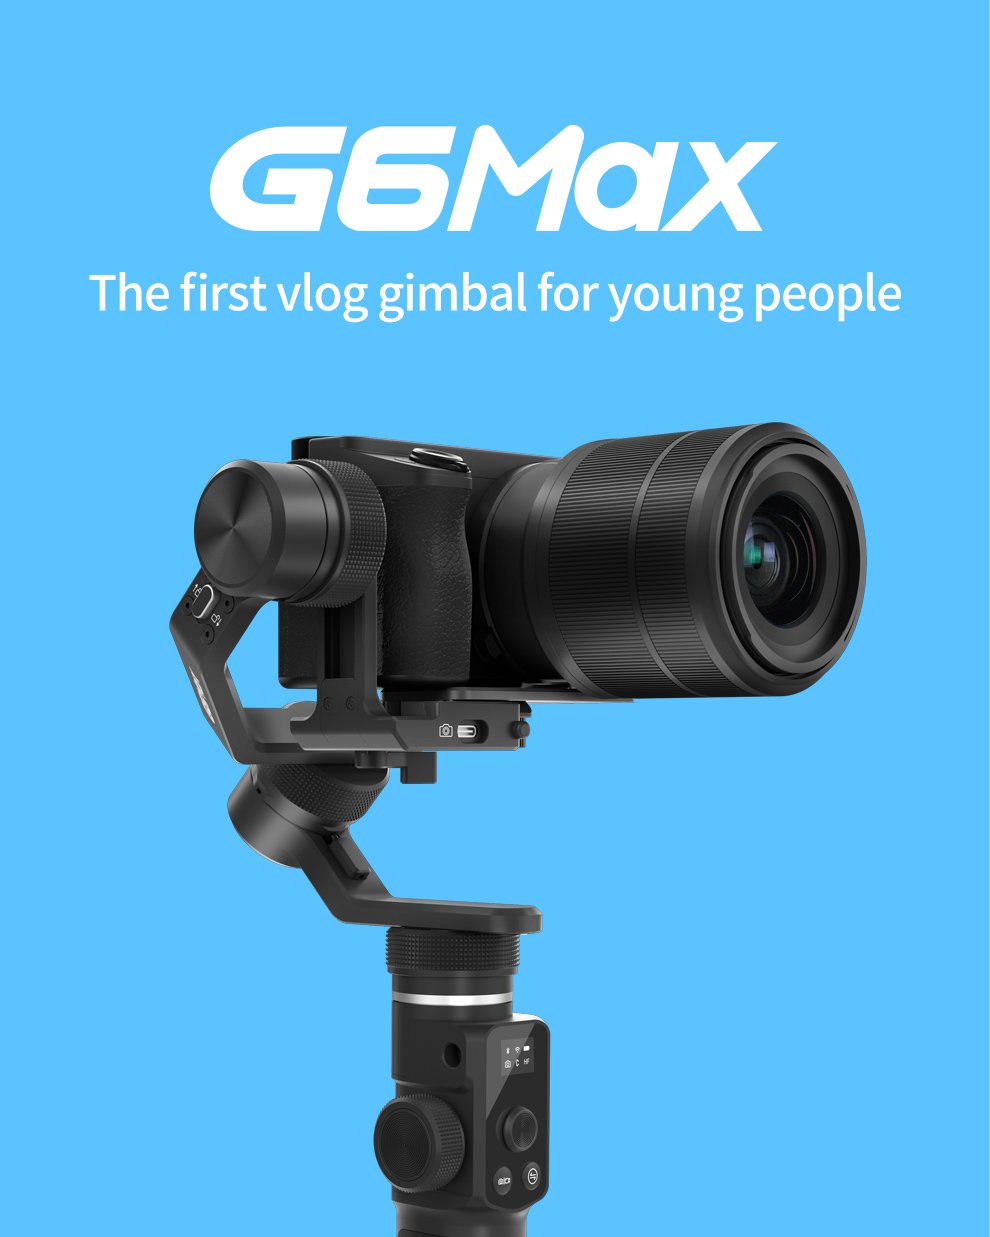 Feiyu G6 Max Gimbal Overview 01